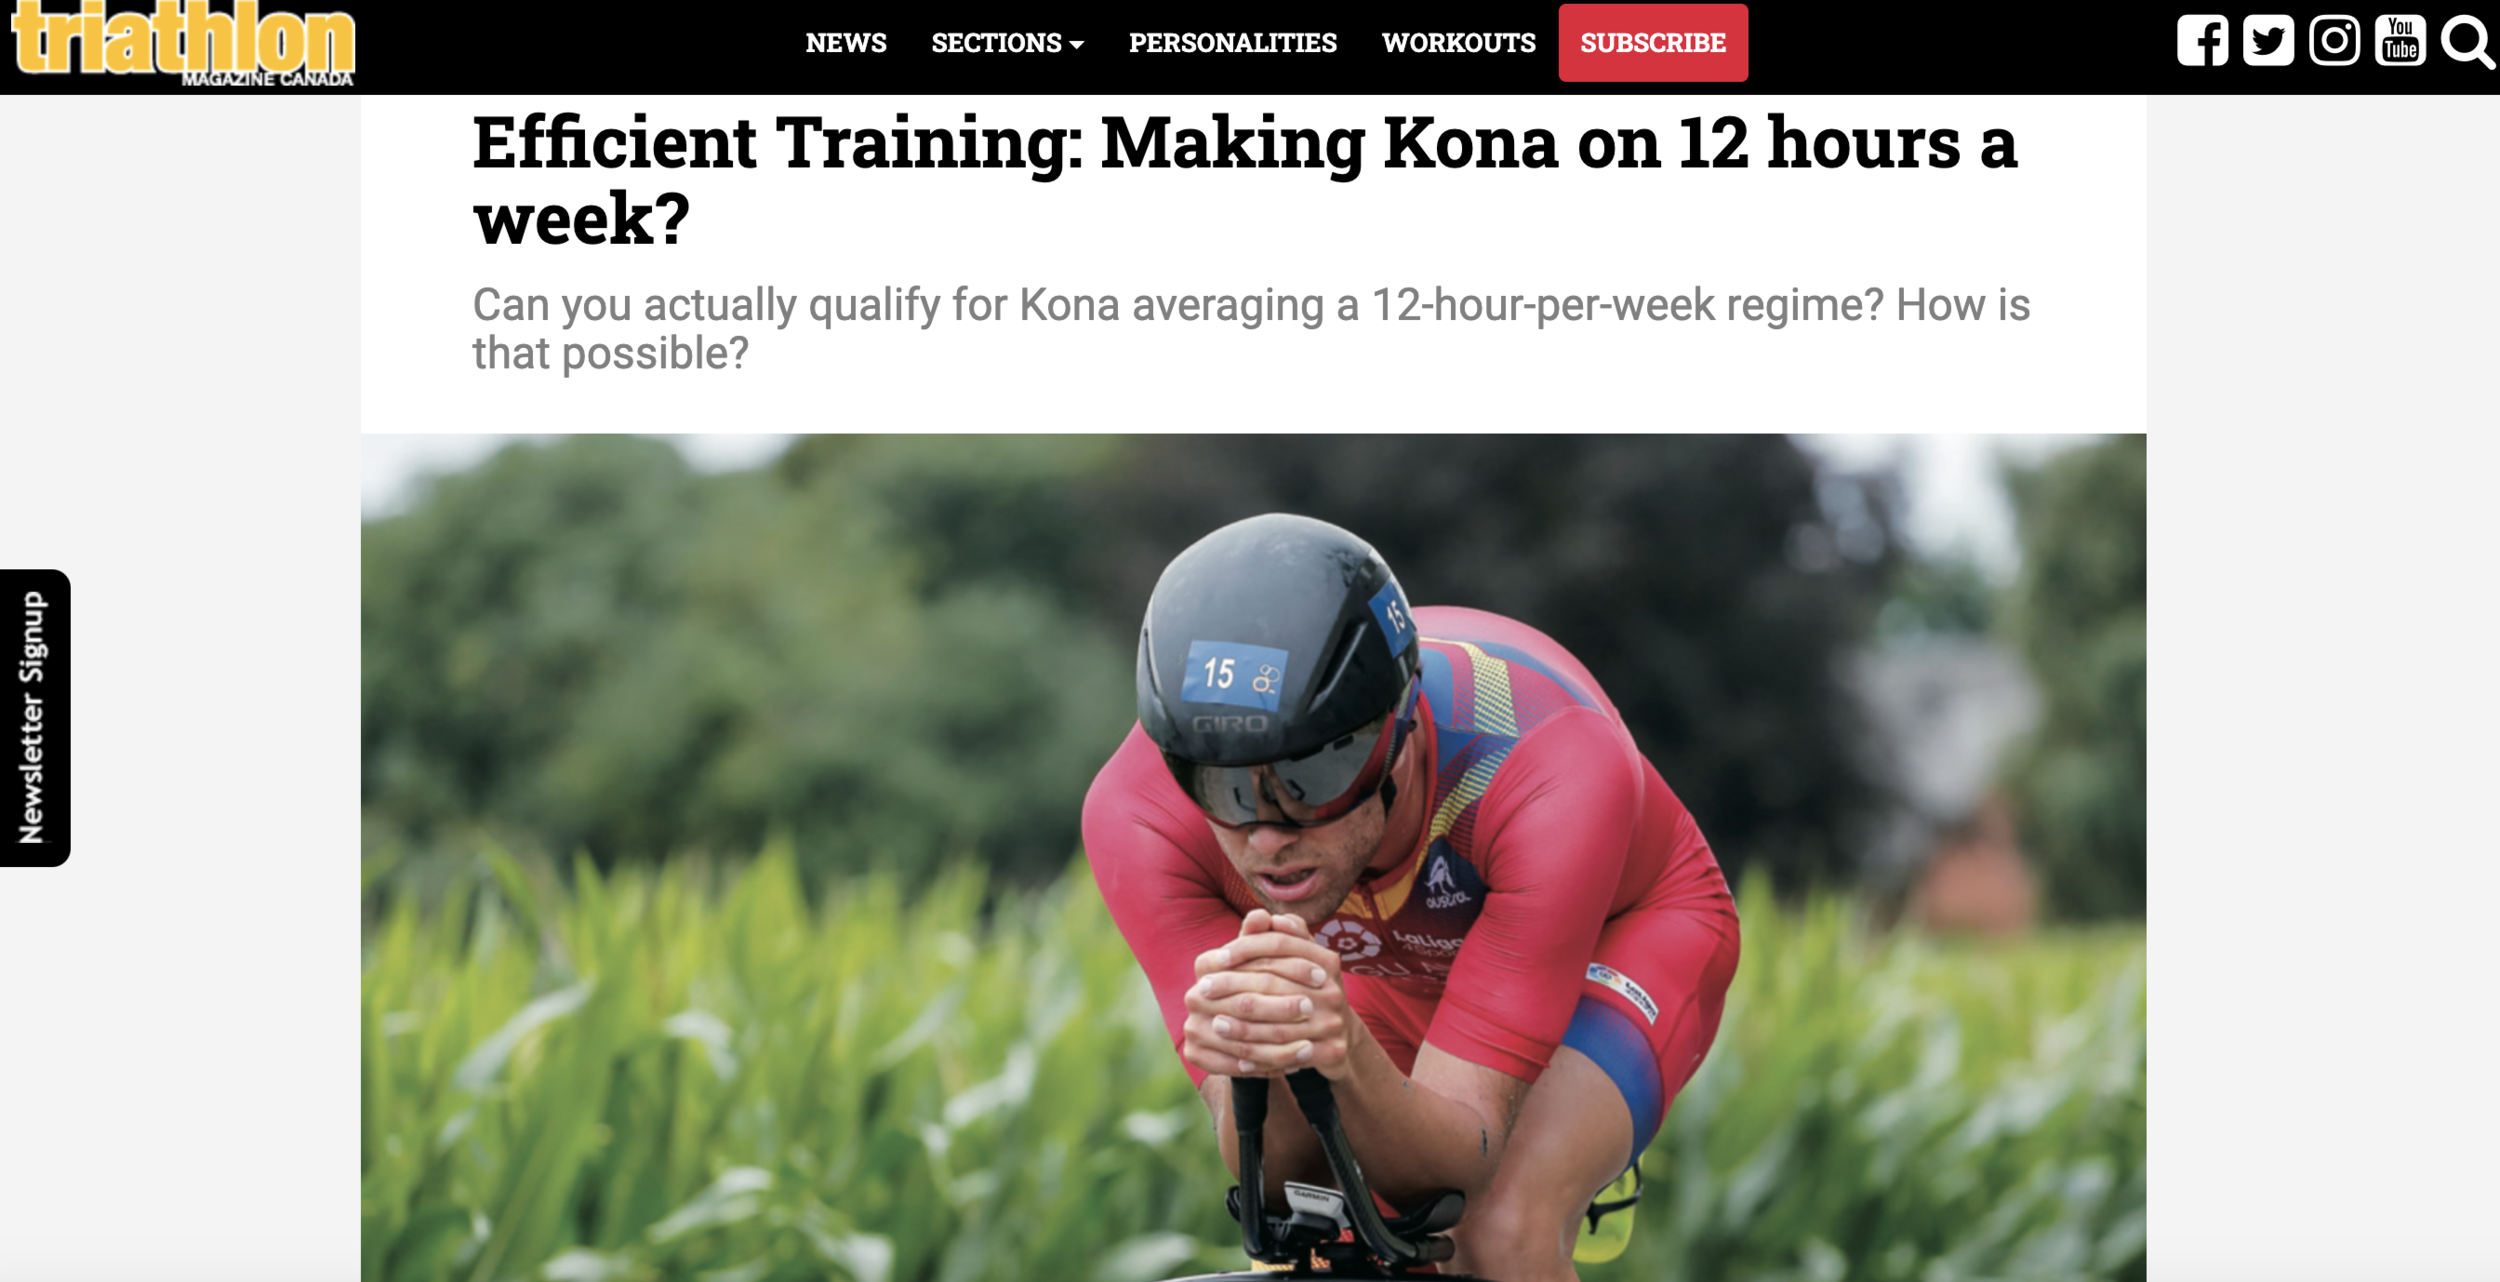 Efficient Training: Making Kona on 12 hours a week?